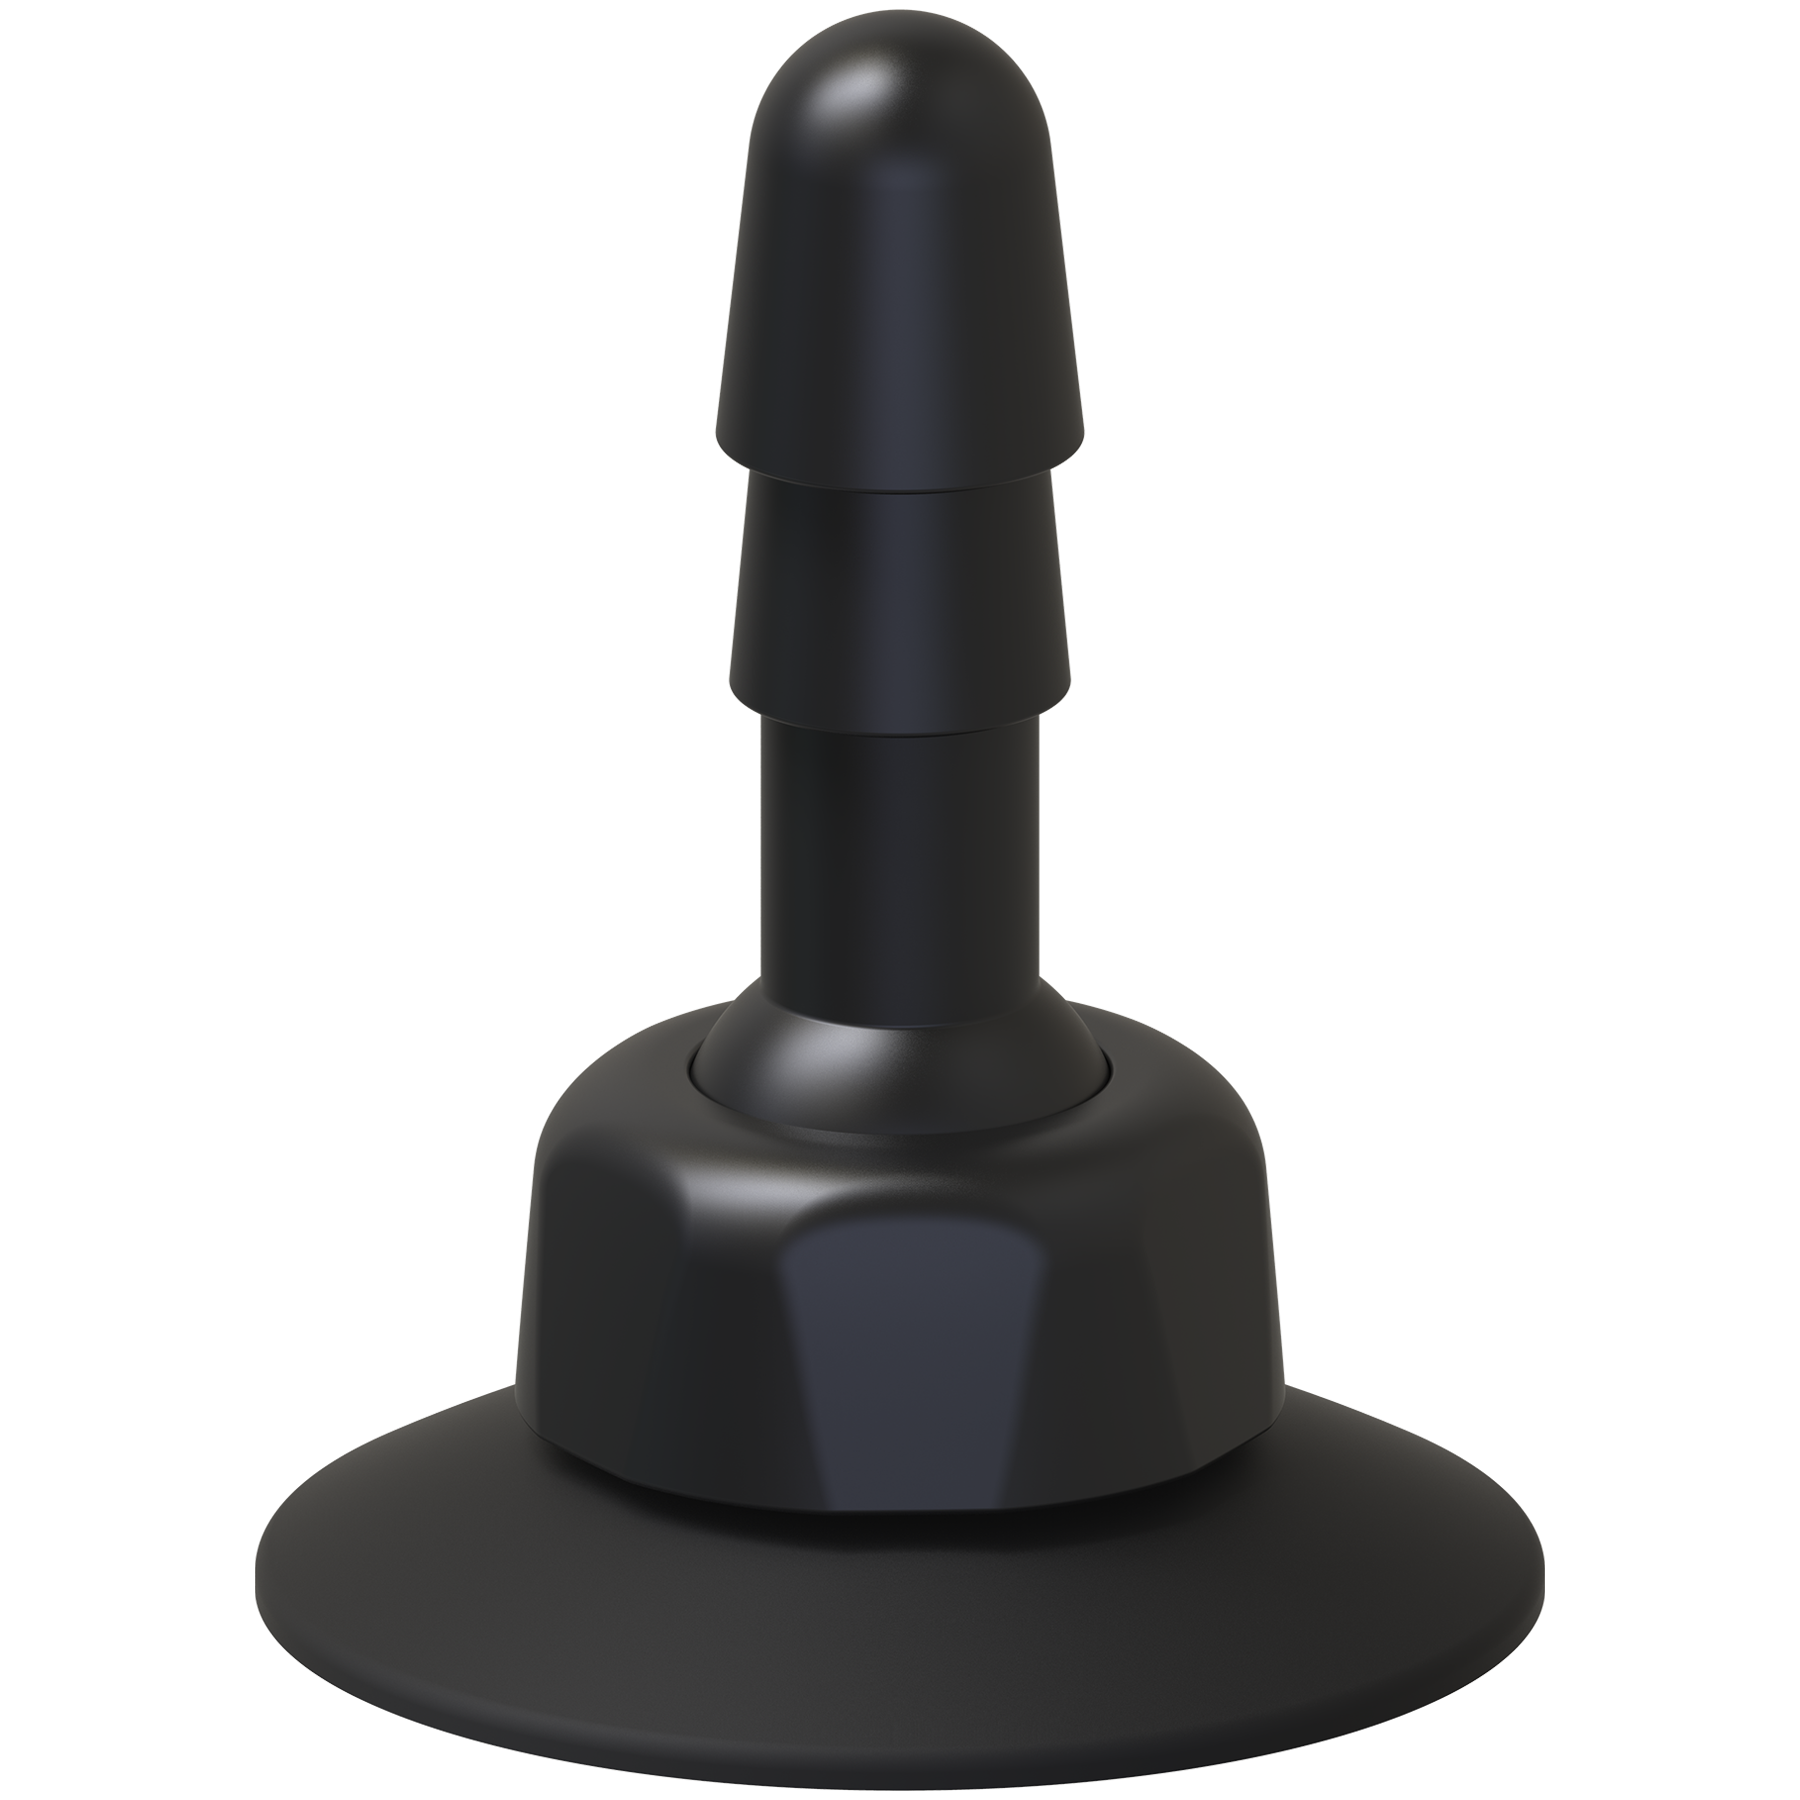 Vac U Lock Deluxe 360 Swivel Suction Cup Plug Black